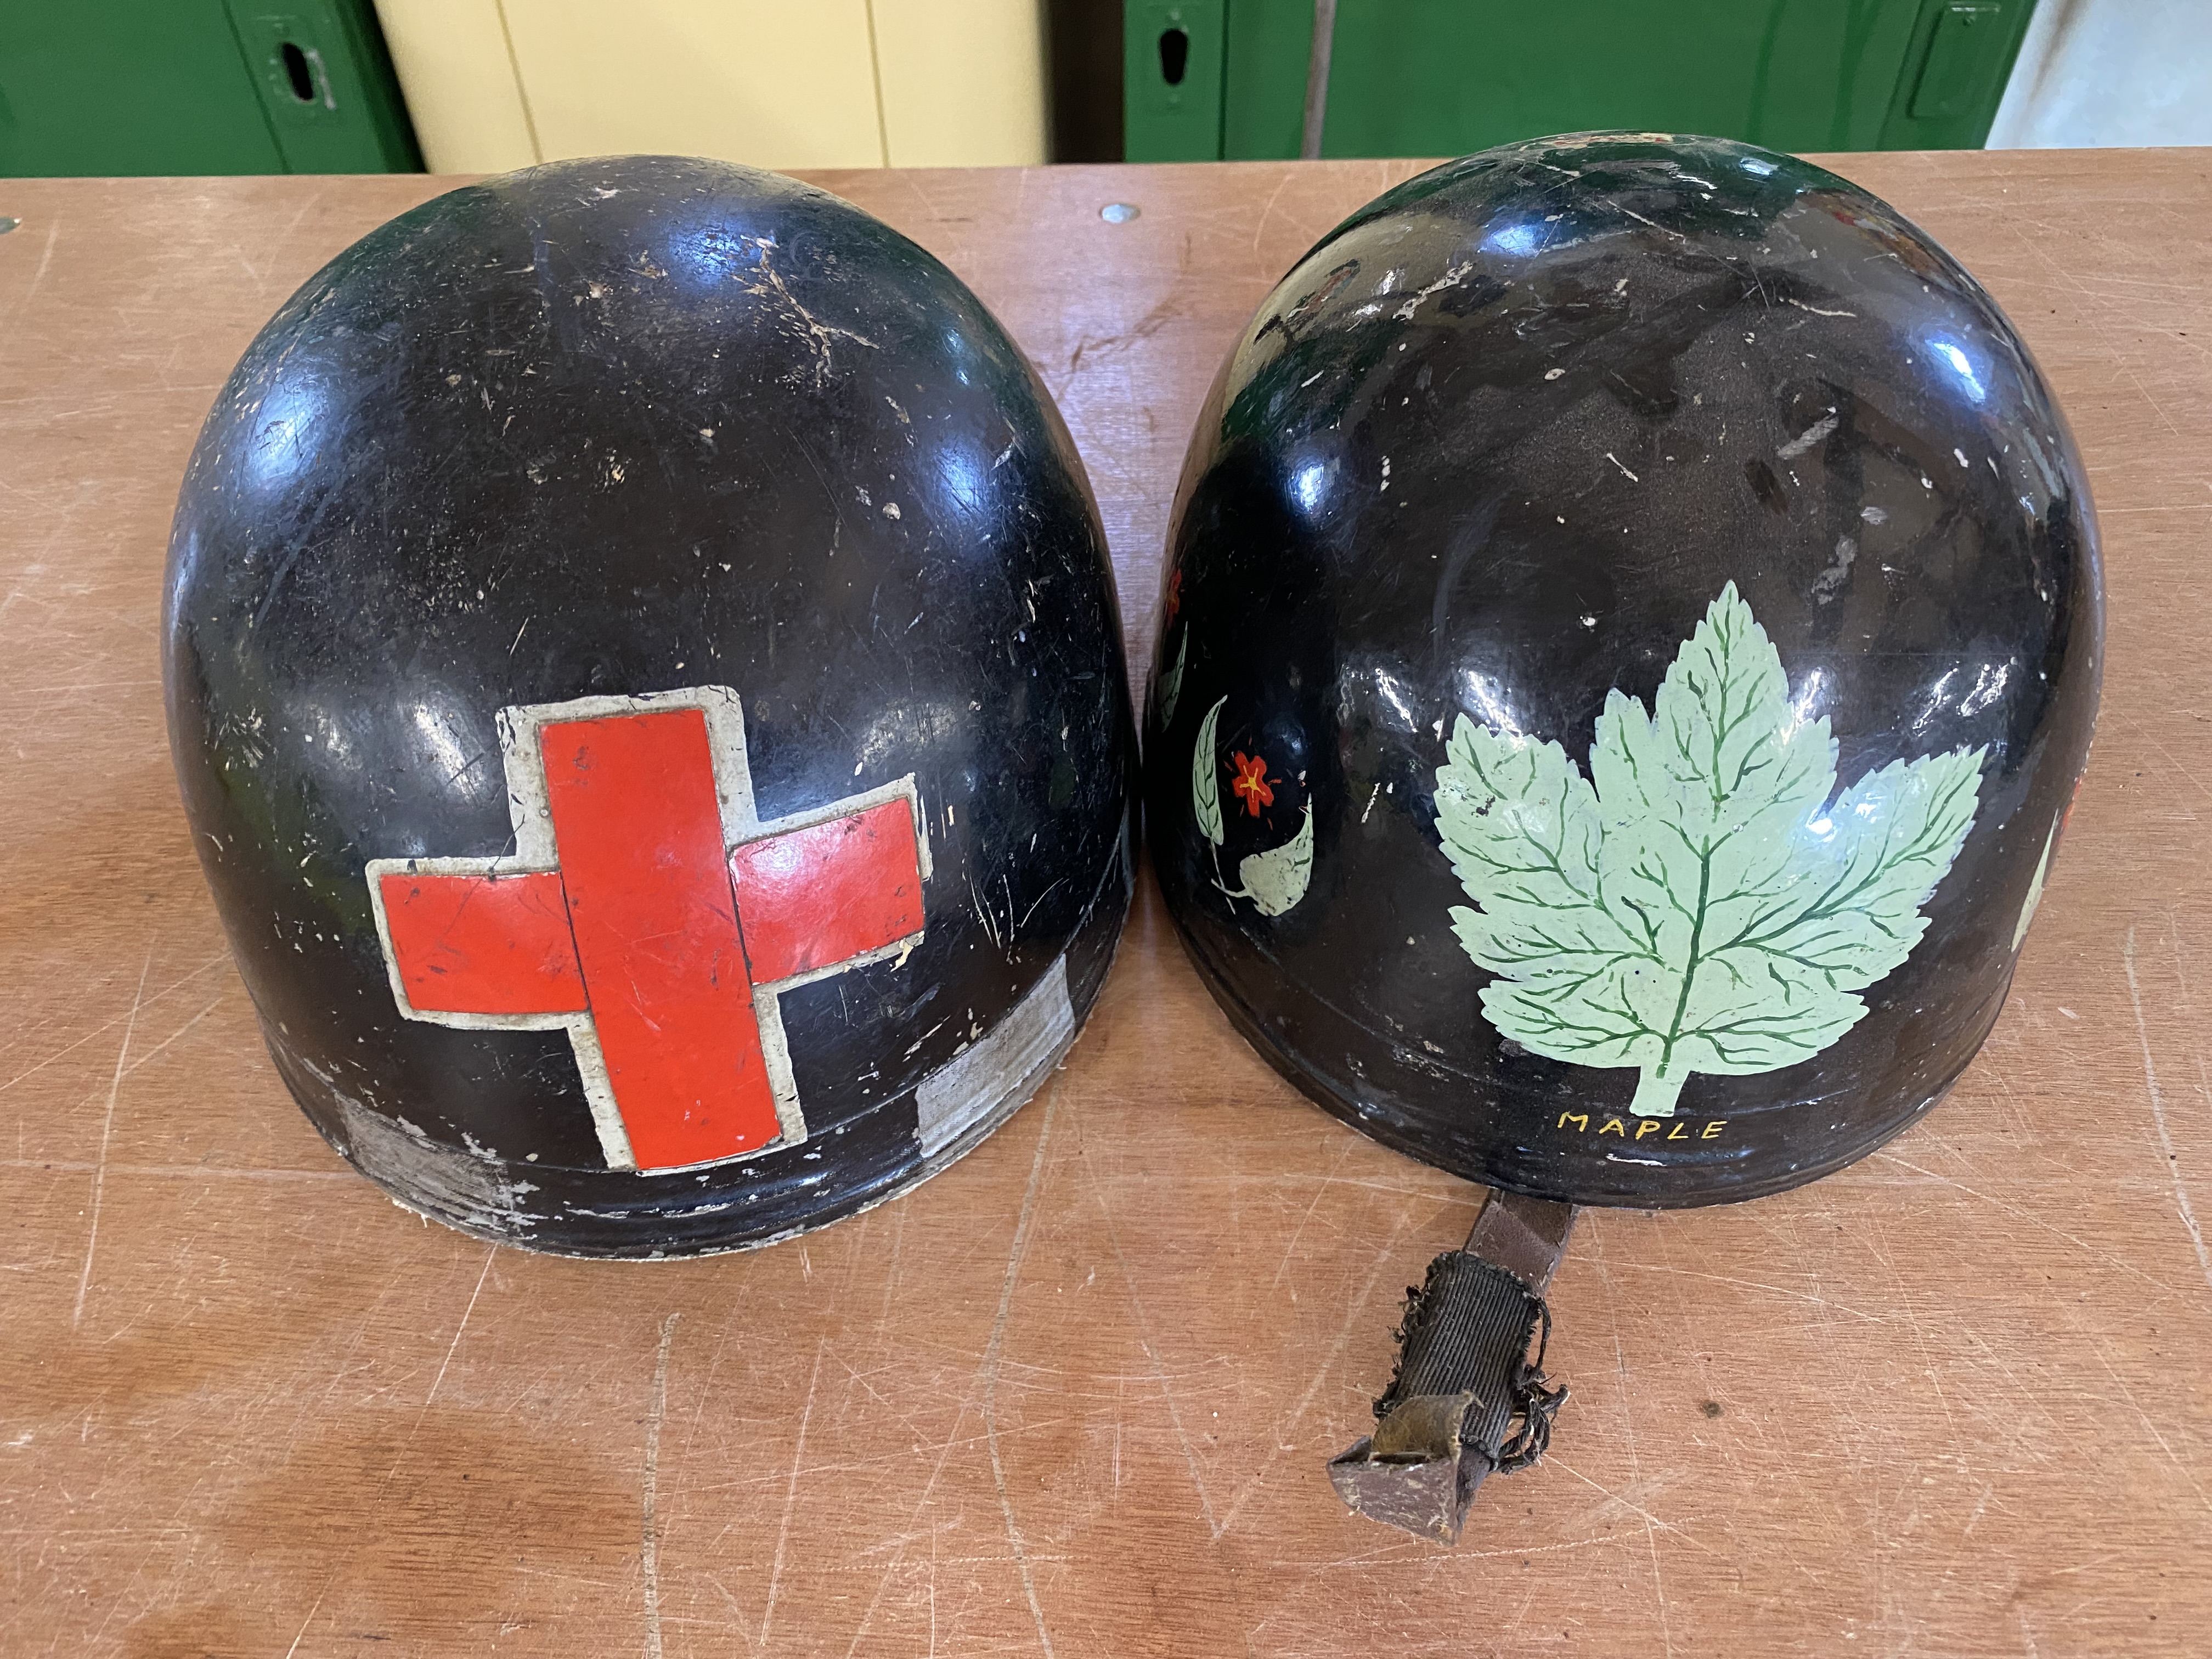 Two Everoak pudding basin helmets.